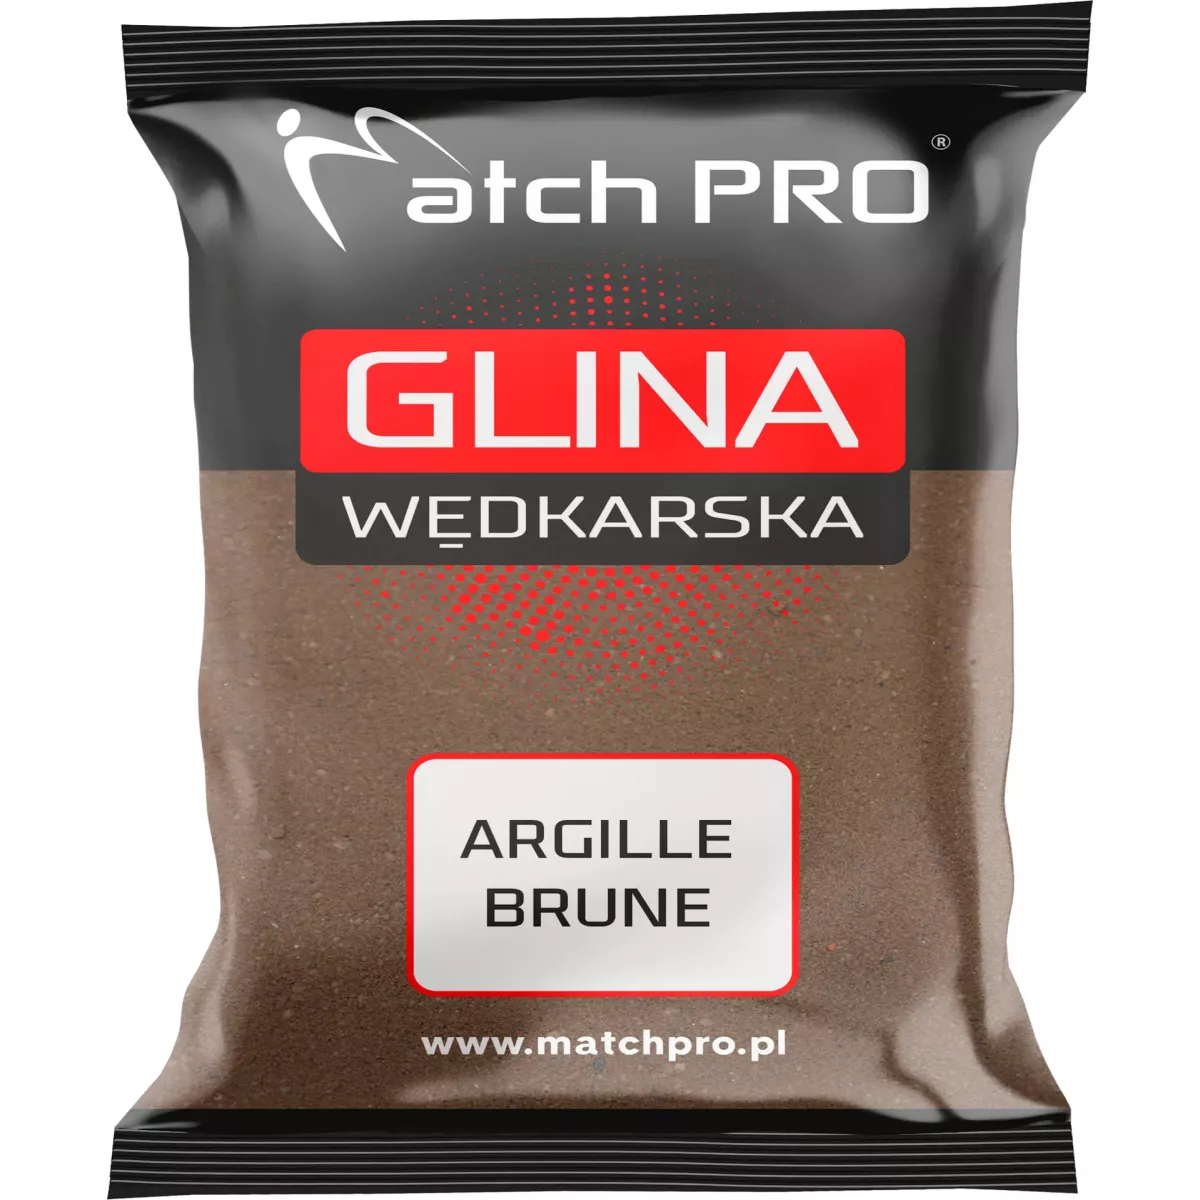 Glina MatchPro 2kg - ARGILE BRUNE Brązowa